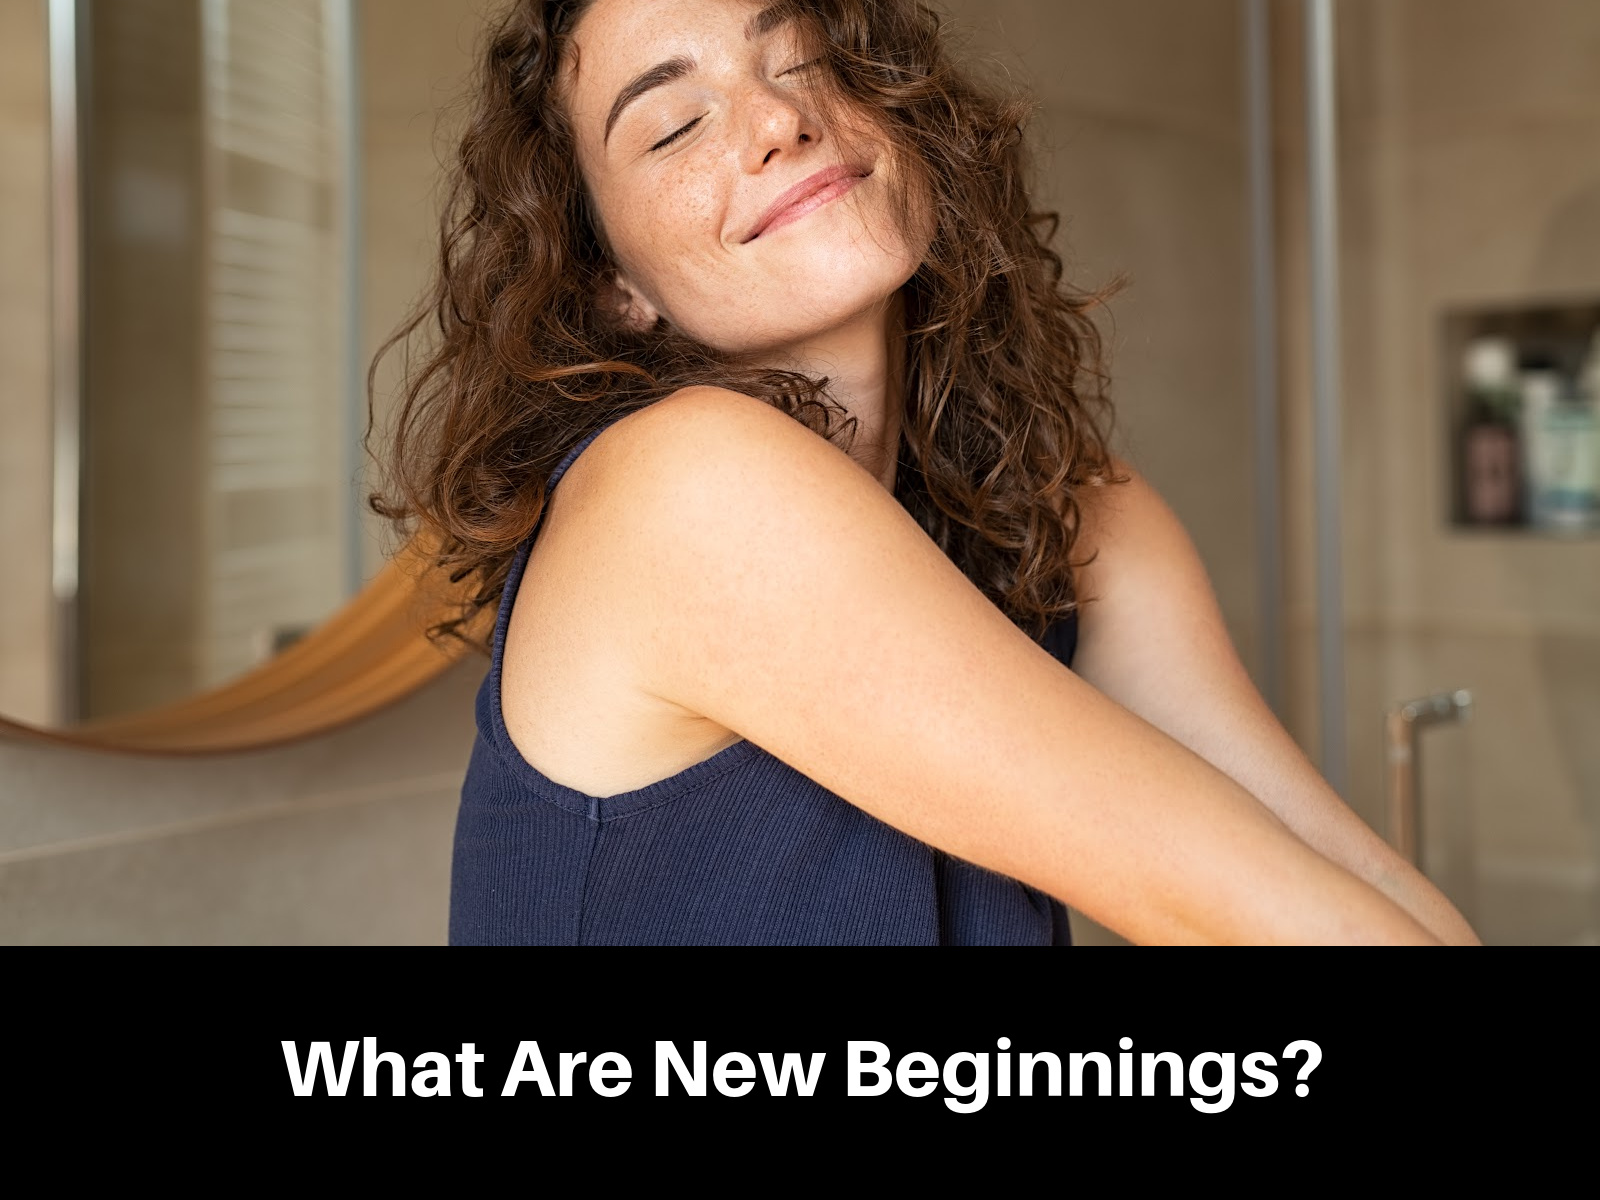 10 New Beginning Symbols - Find New Life This Season